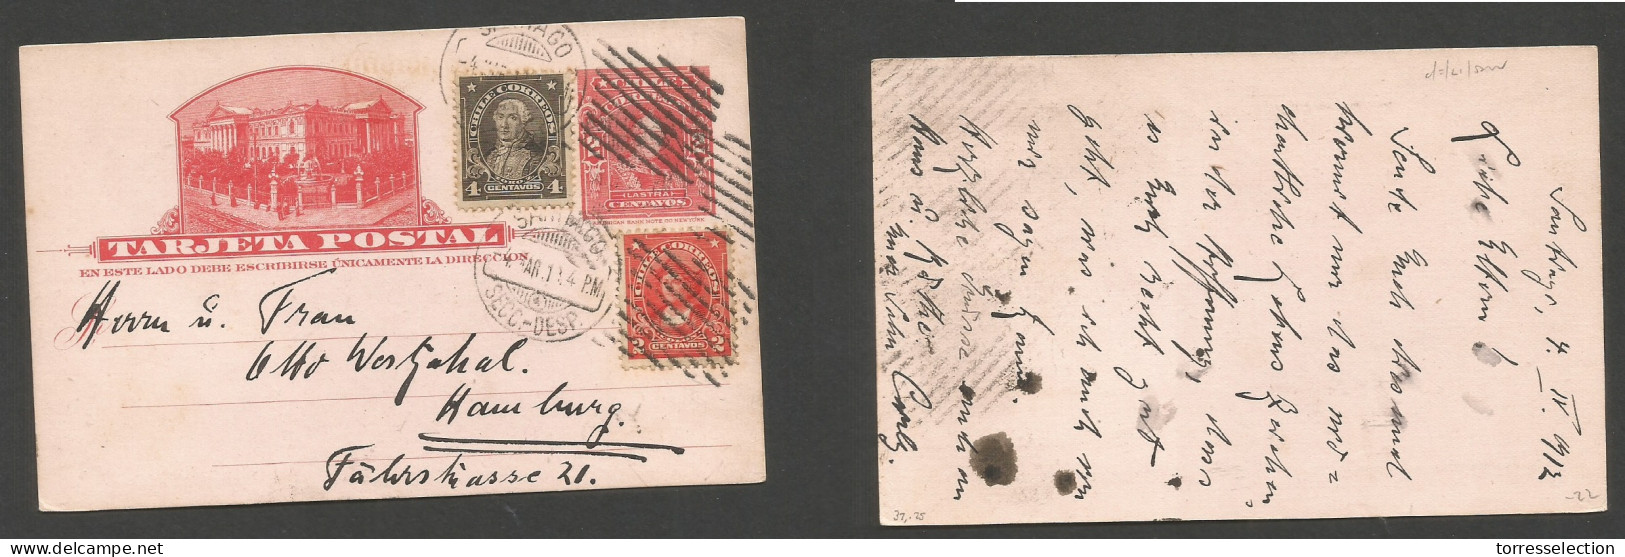 CHILE - Stationery. 1912 (12 Apr) Stgo - Germany, Hamburg. 2c Red Illustr Stat Card + 2 Adtls At 8c Rate. Fine Used. - Chile